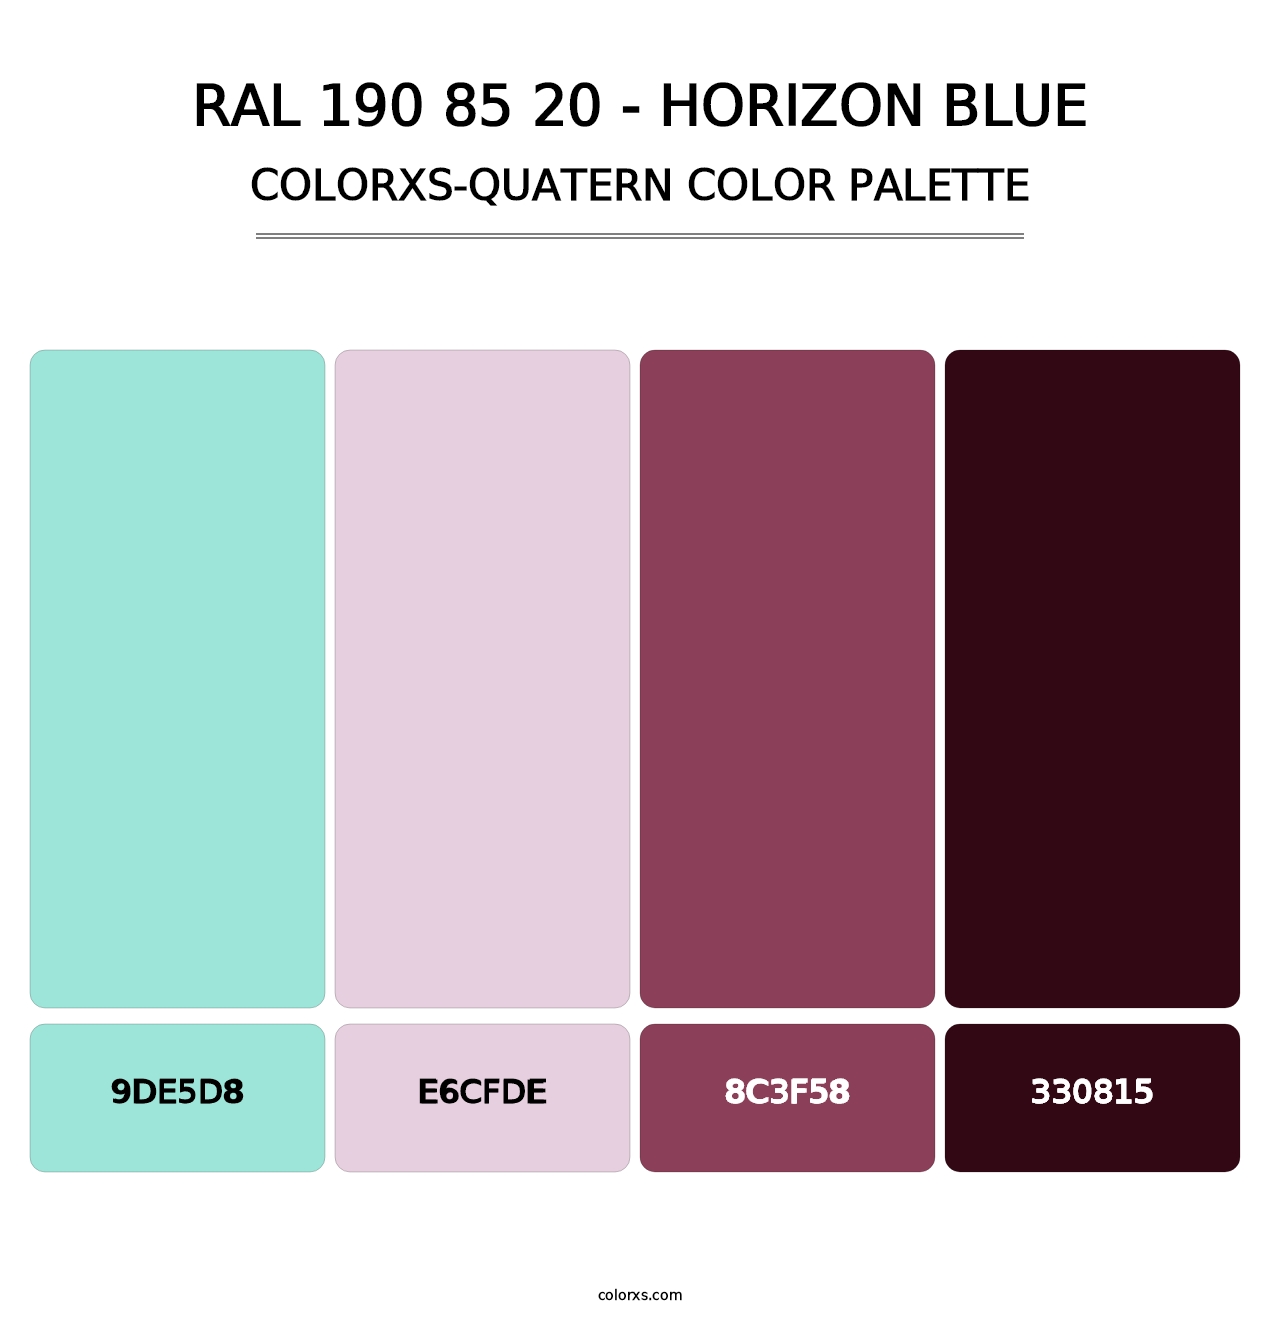 RAL 190 85 20 - Horizon Blue - Colorxs Quatern Palette